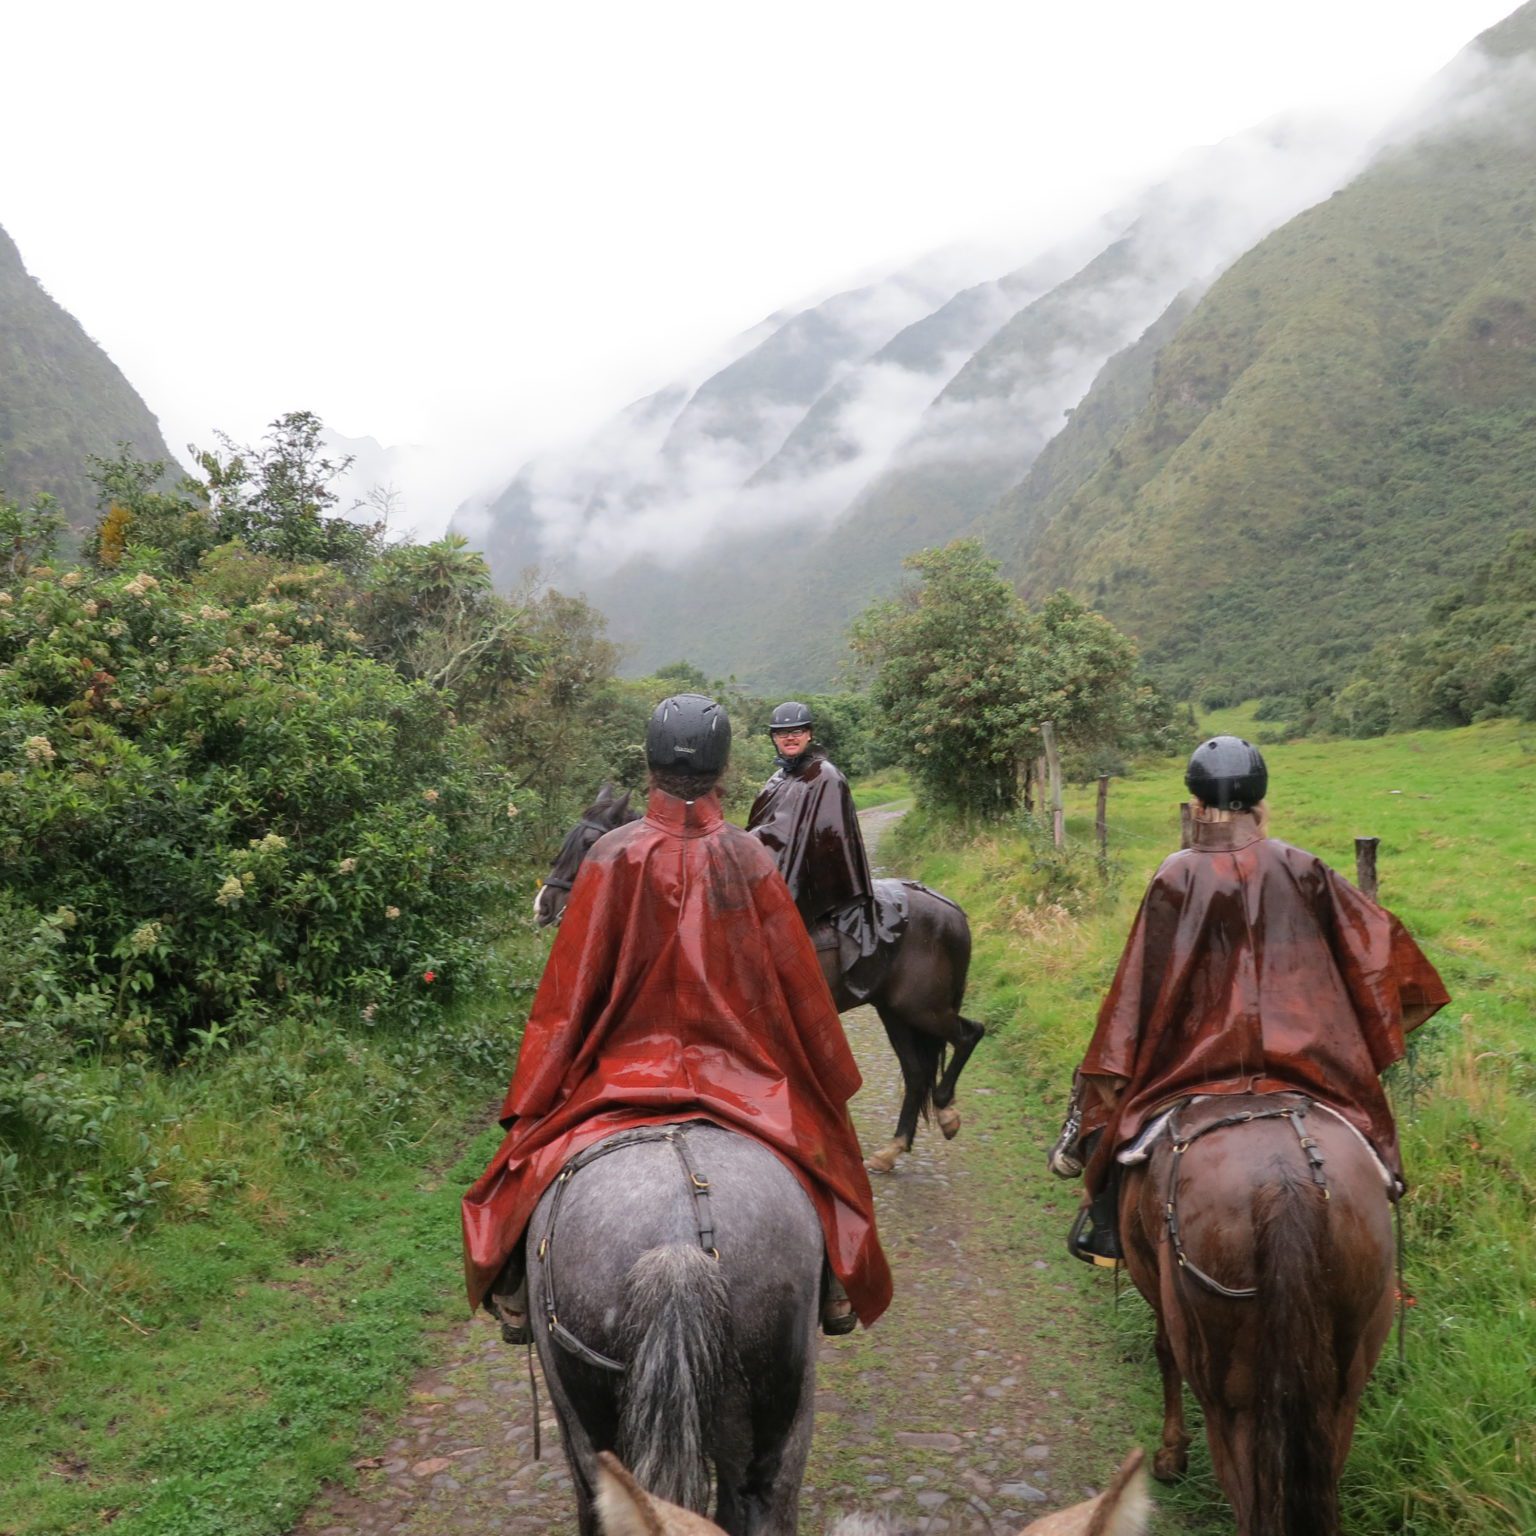 Horseback riding in the rain in Highlands